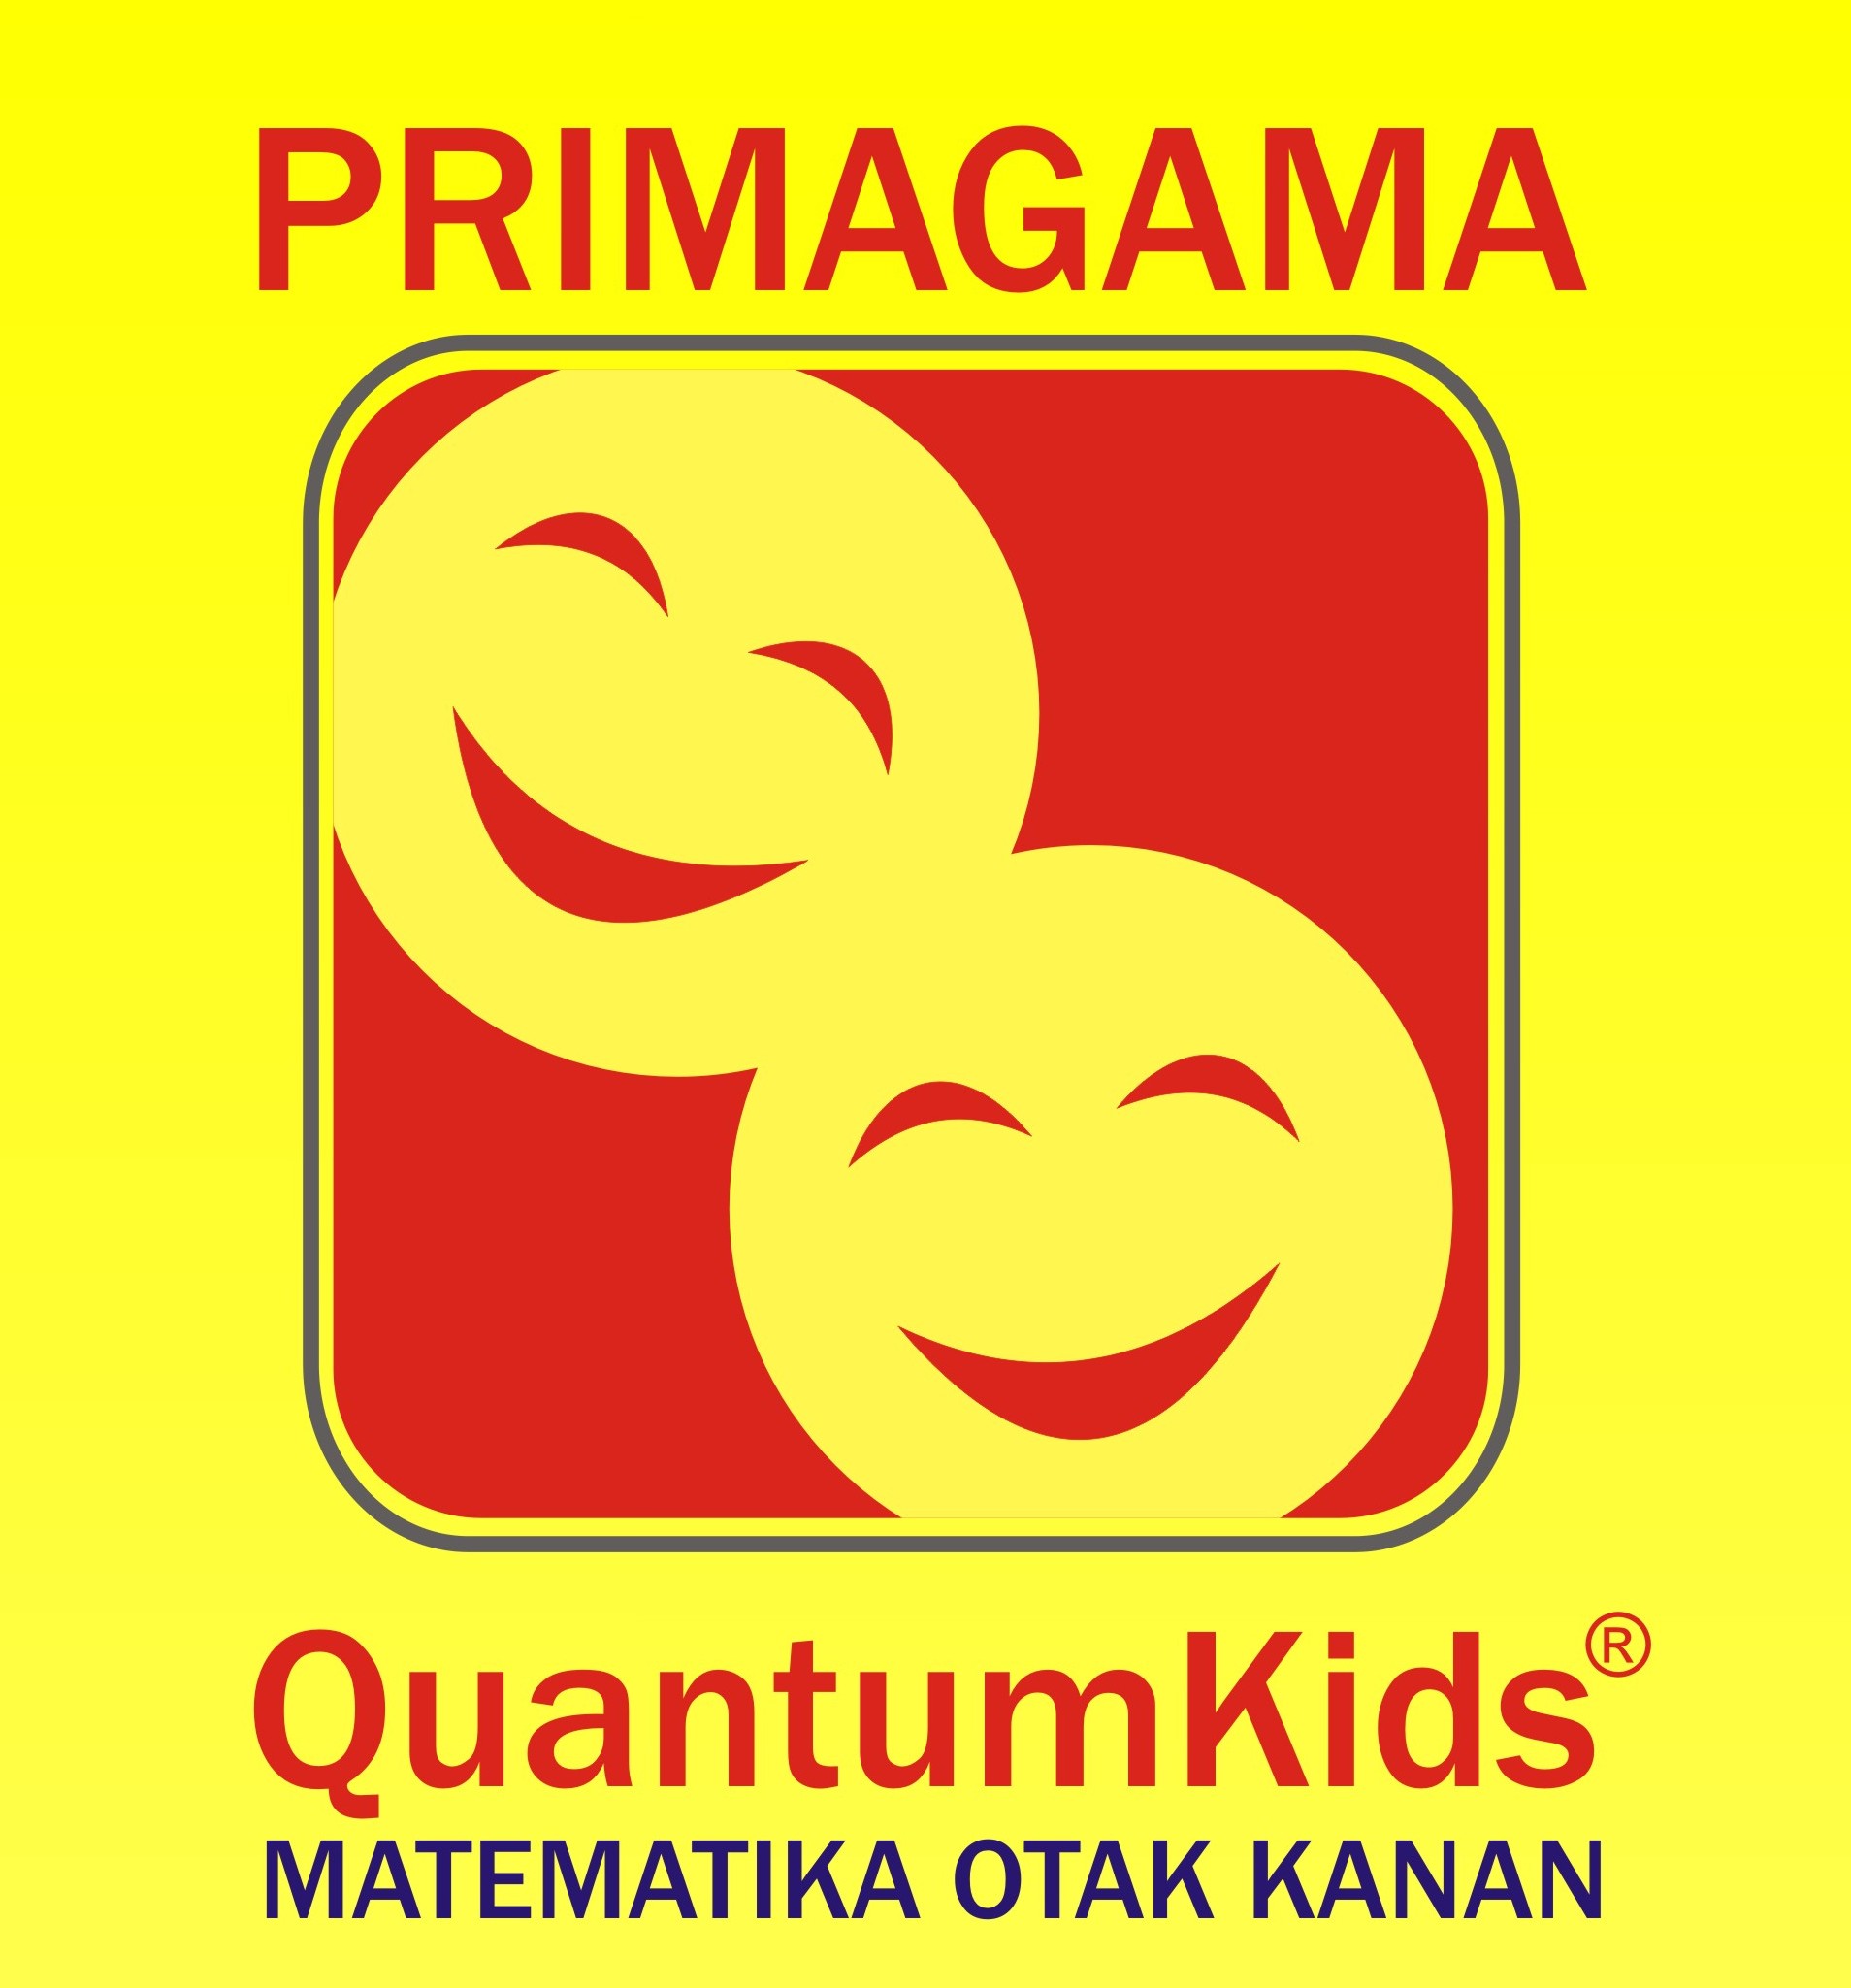 Logo primagama quantum kids sulfat kota malang